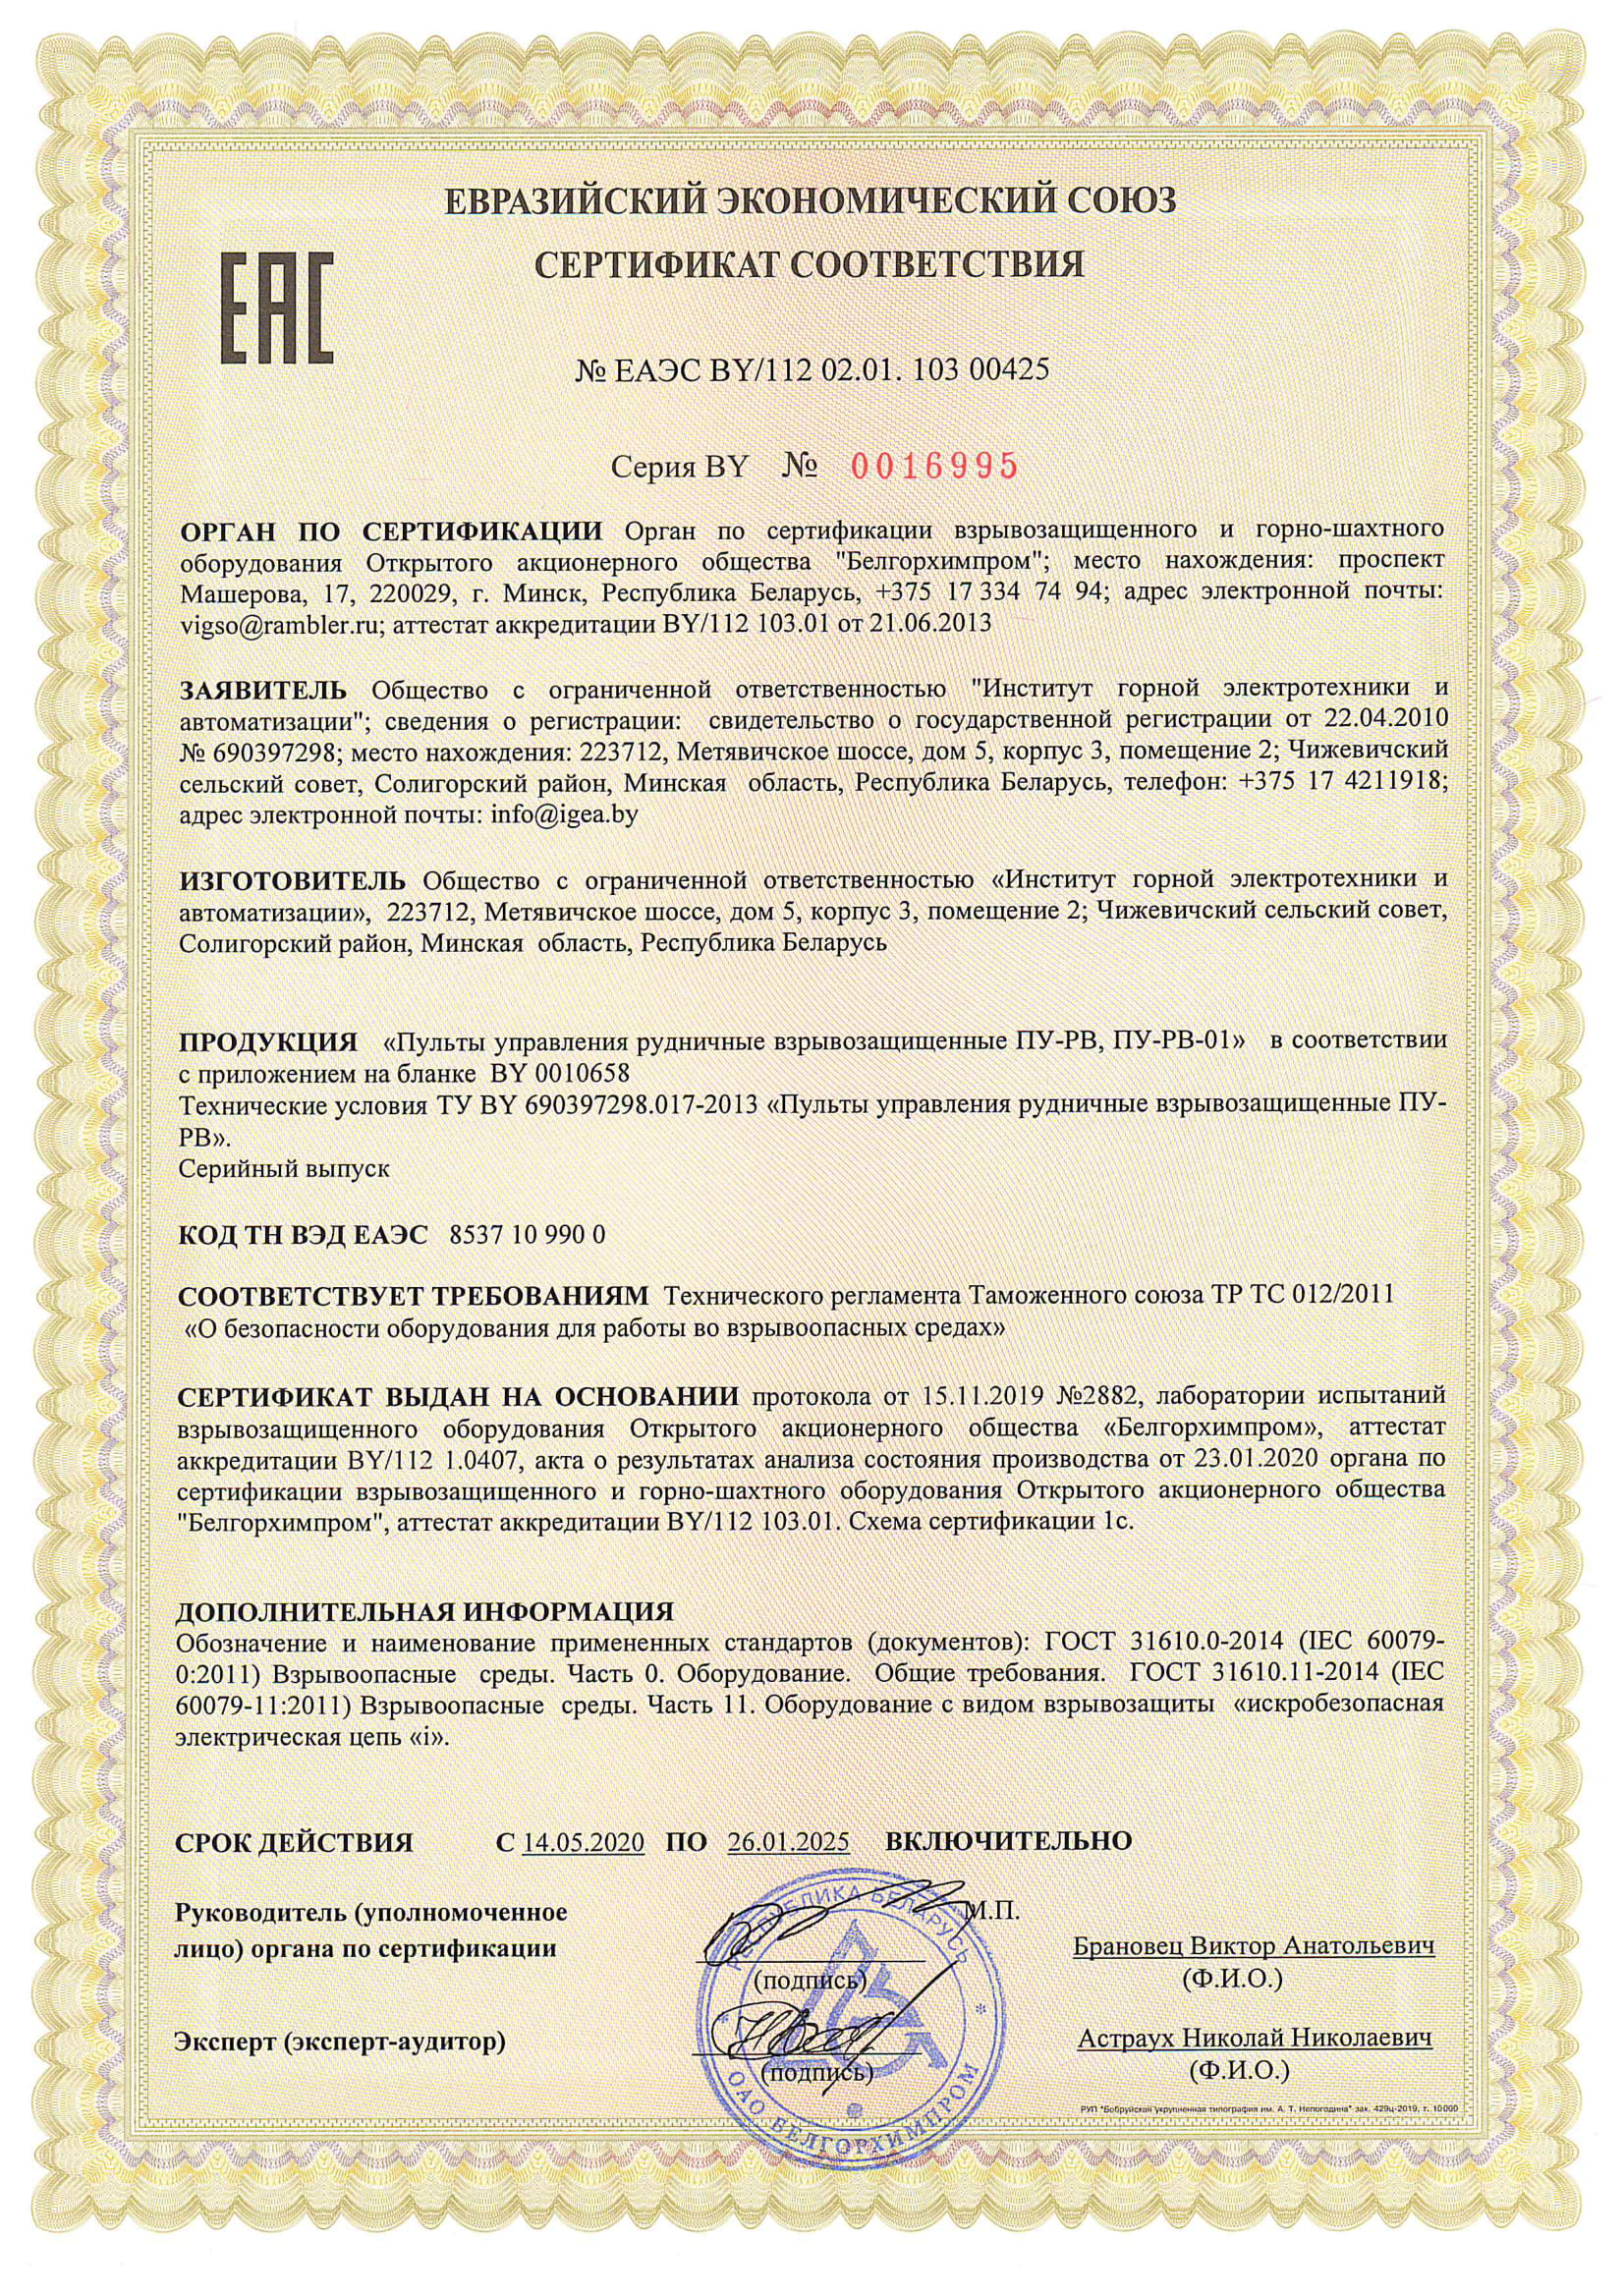 Сертификат соответствия ТР ТС 012/2011 №ЕАЭС BY/112 02.01. 103 00425 до 26.01.2025